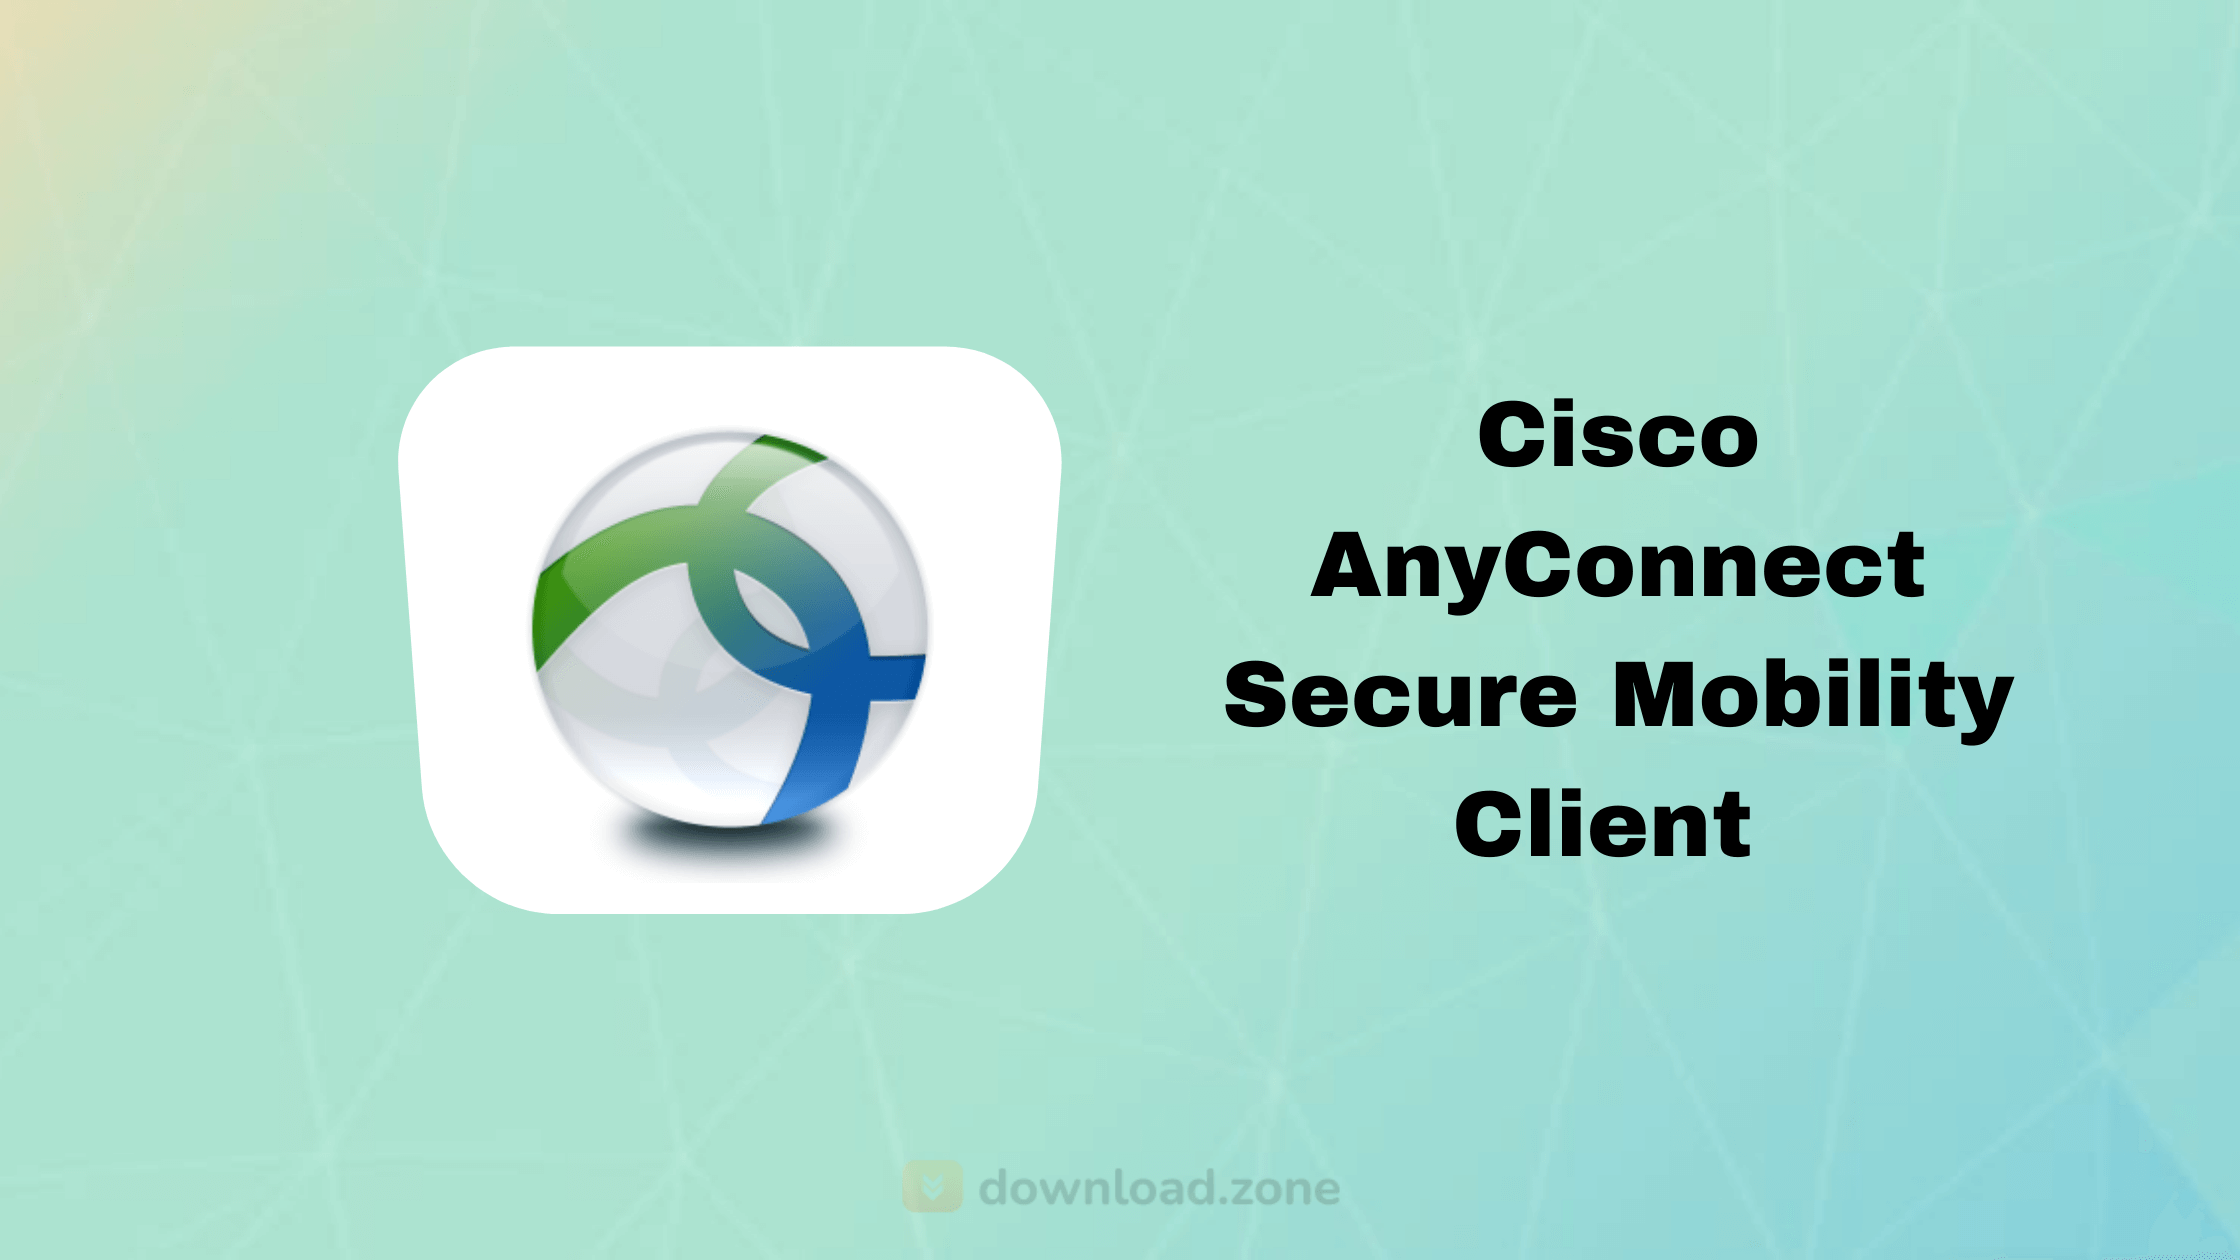 vpn client cisco windows 8.1 download